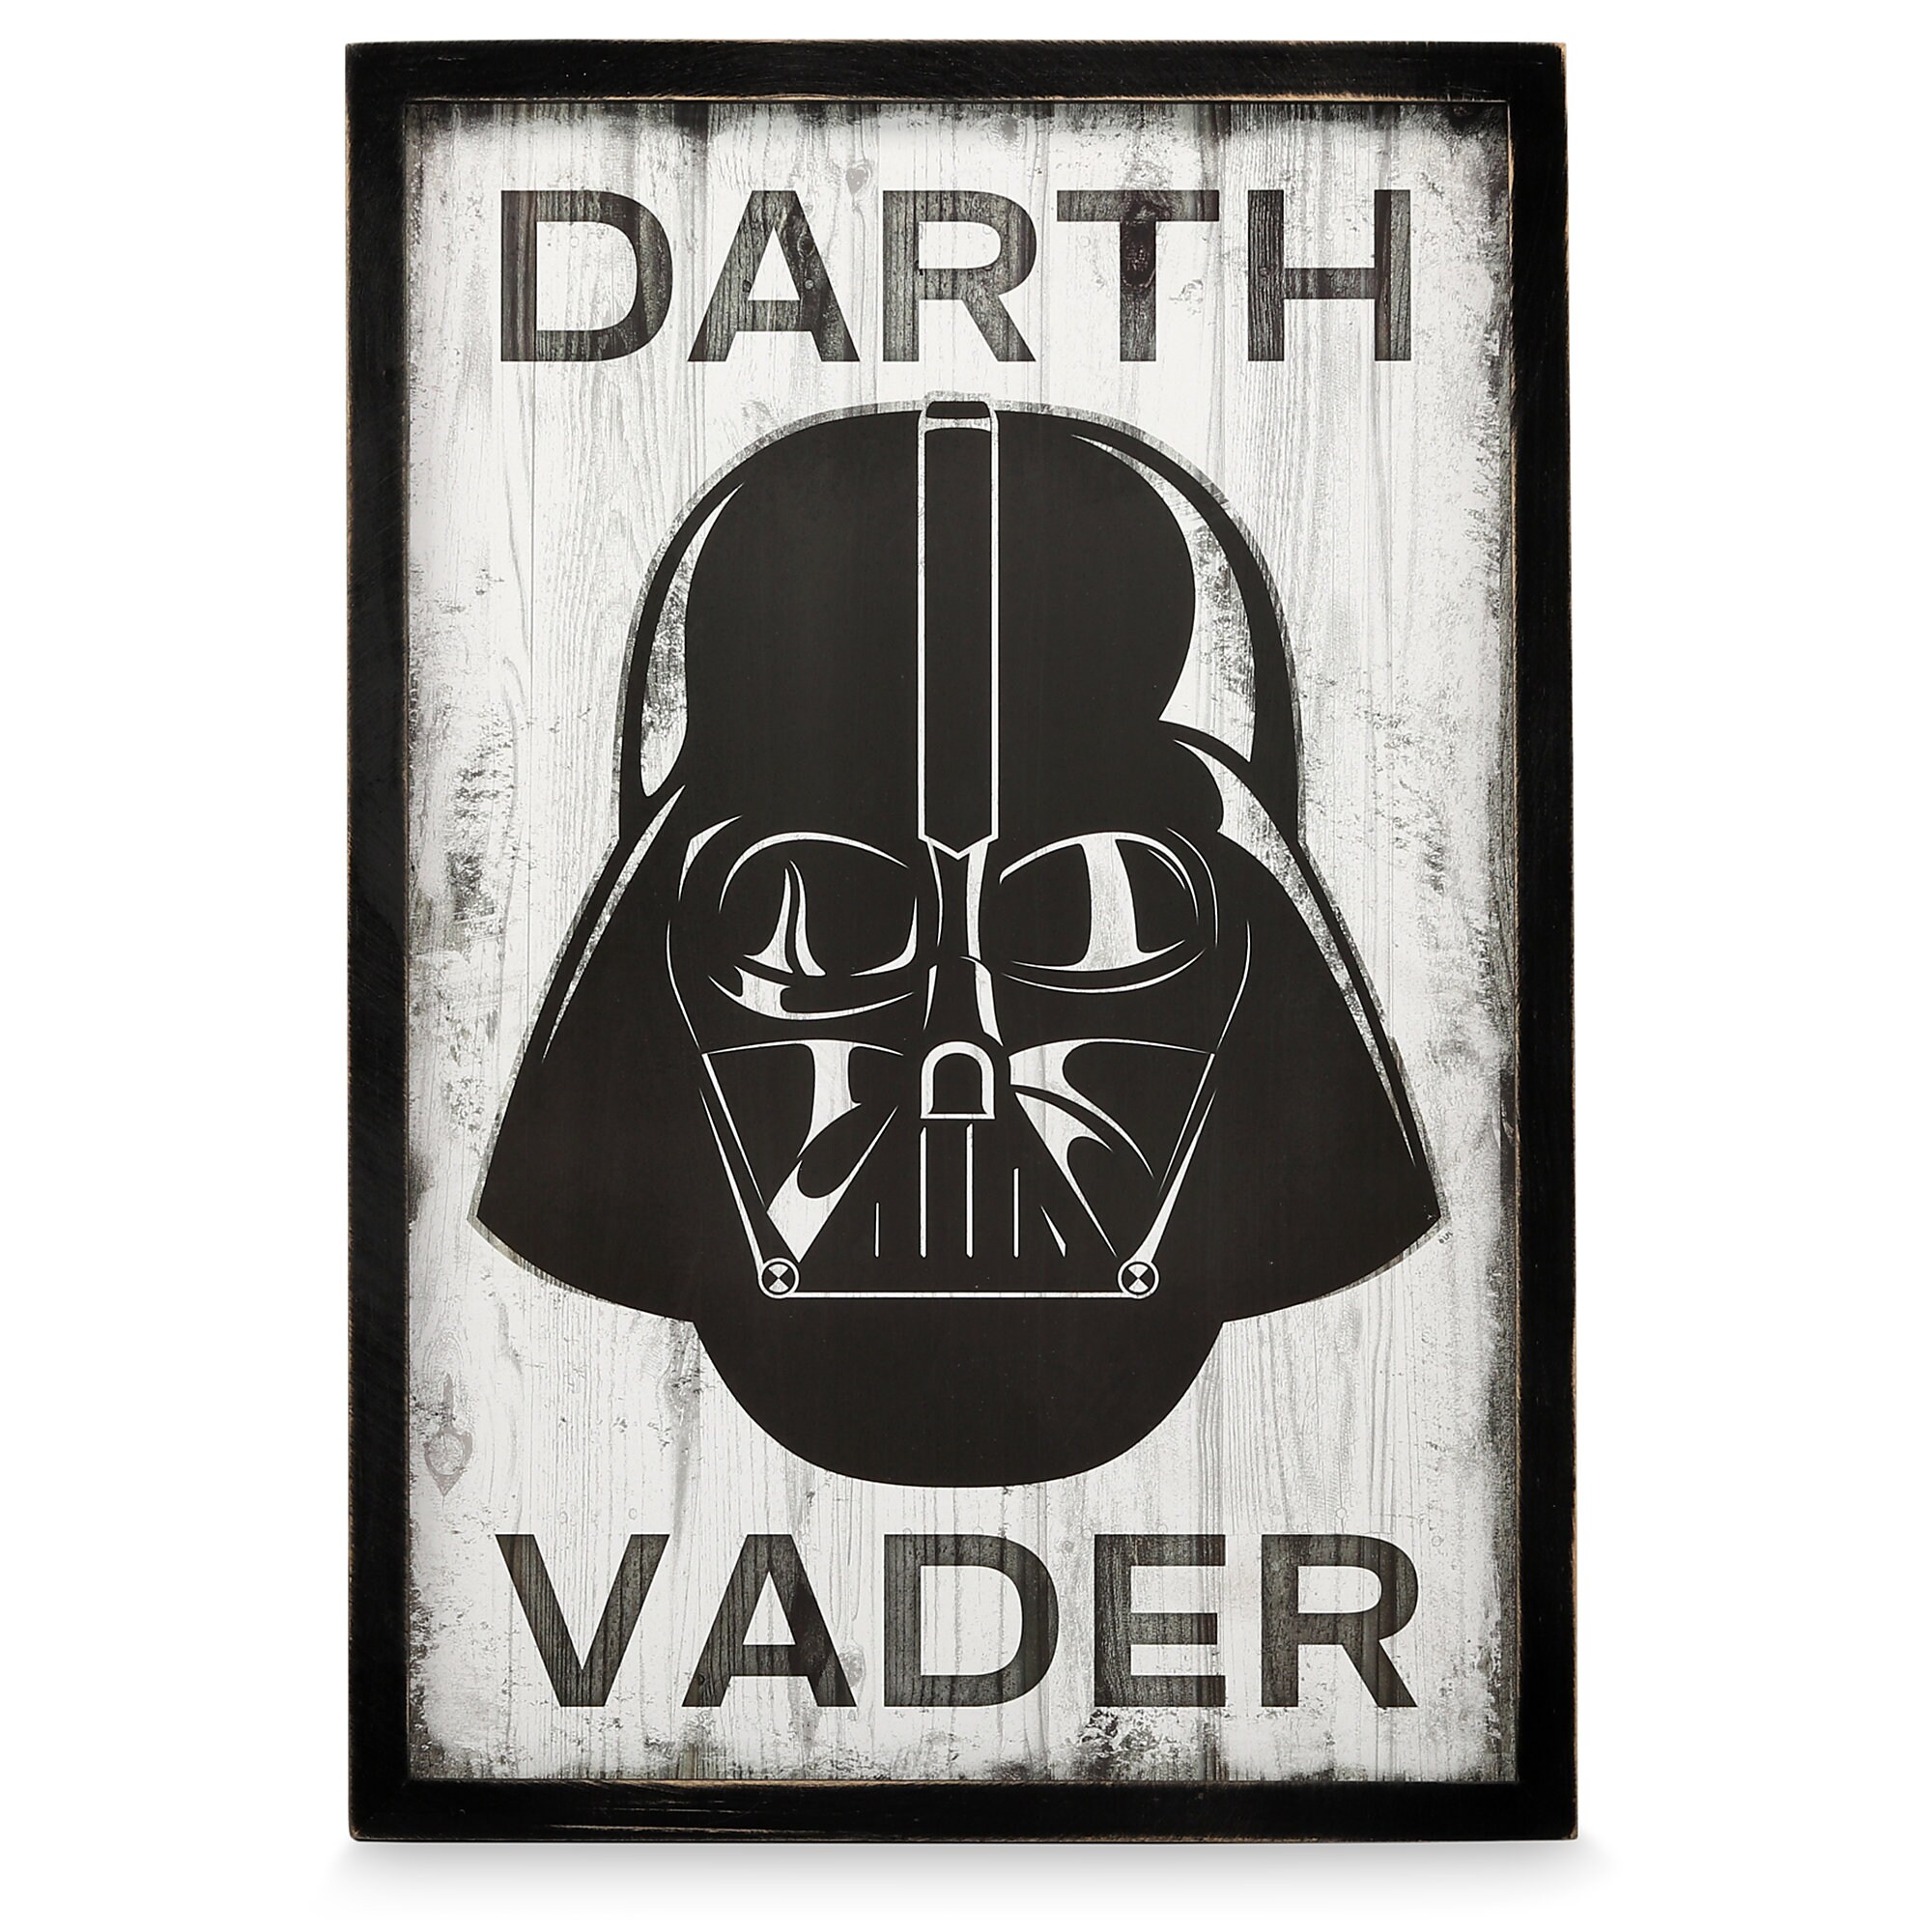 Darth Vader Wall Decor - Star Wars